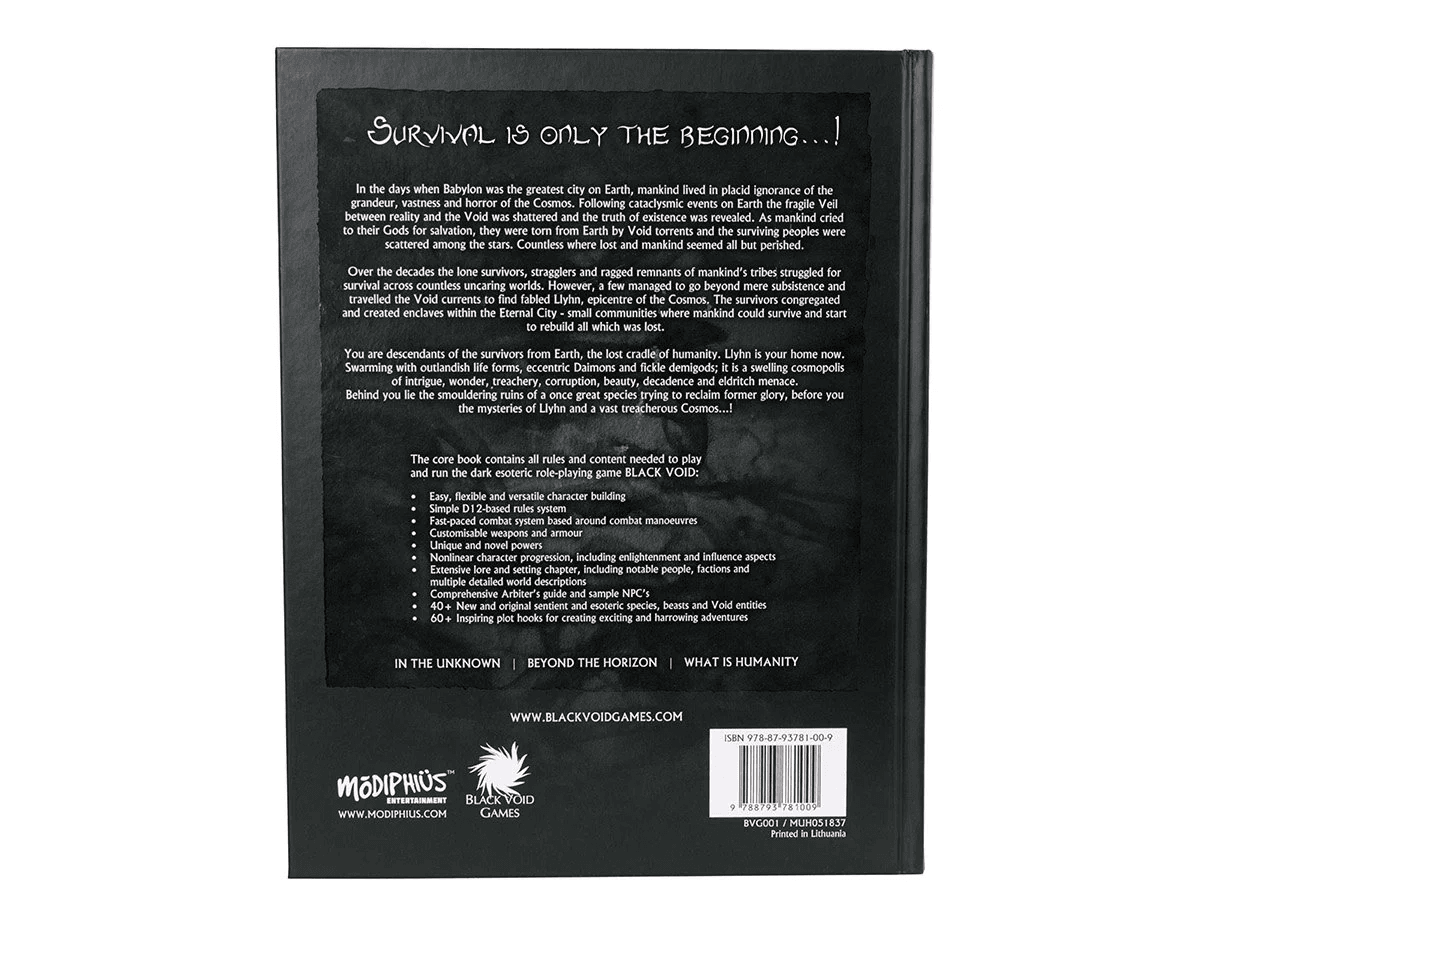 Black Void: Core Book